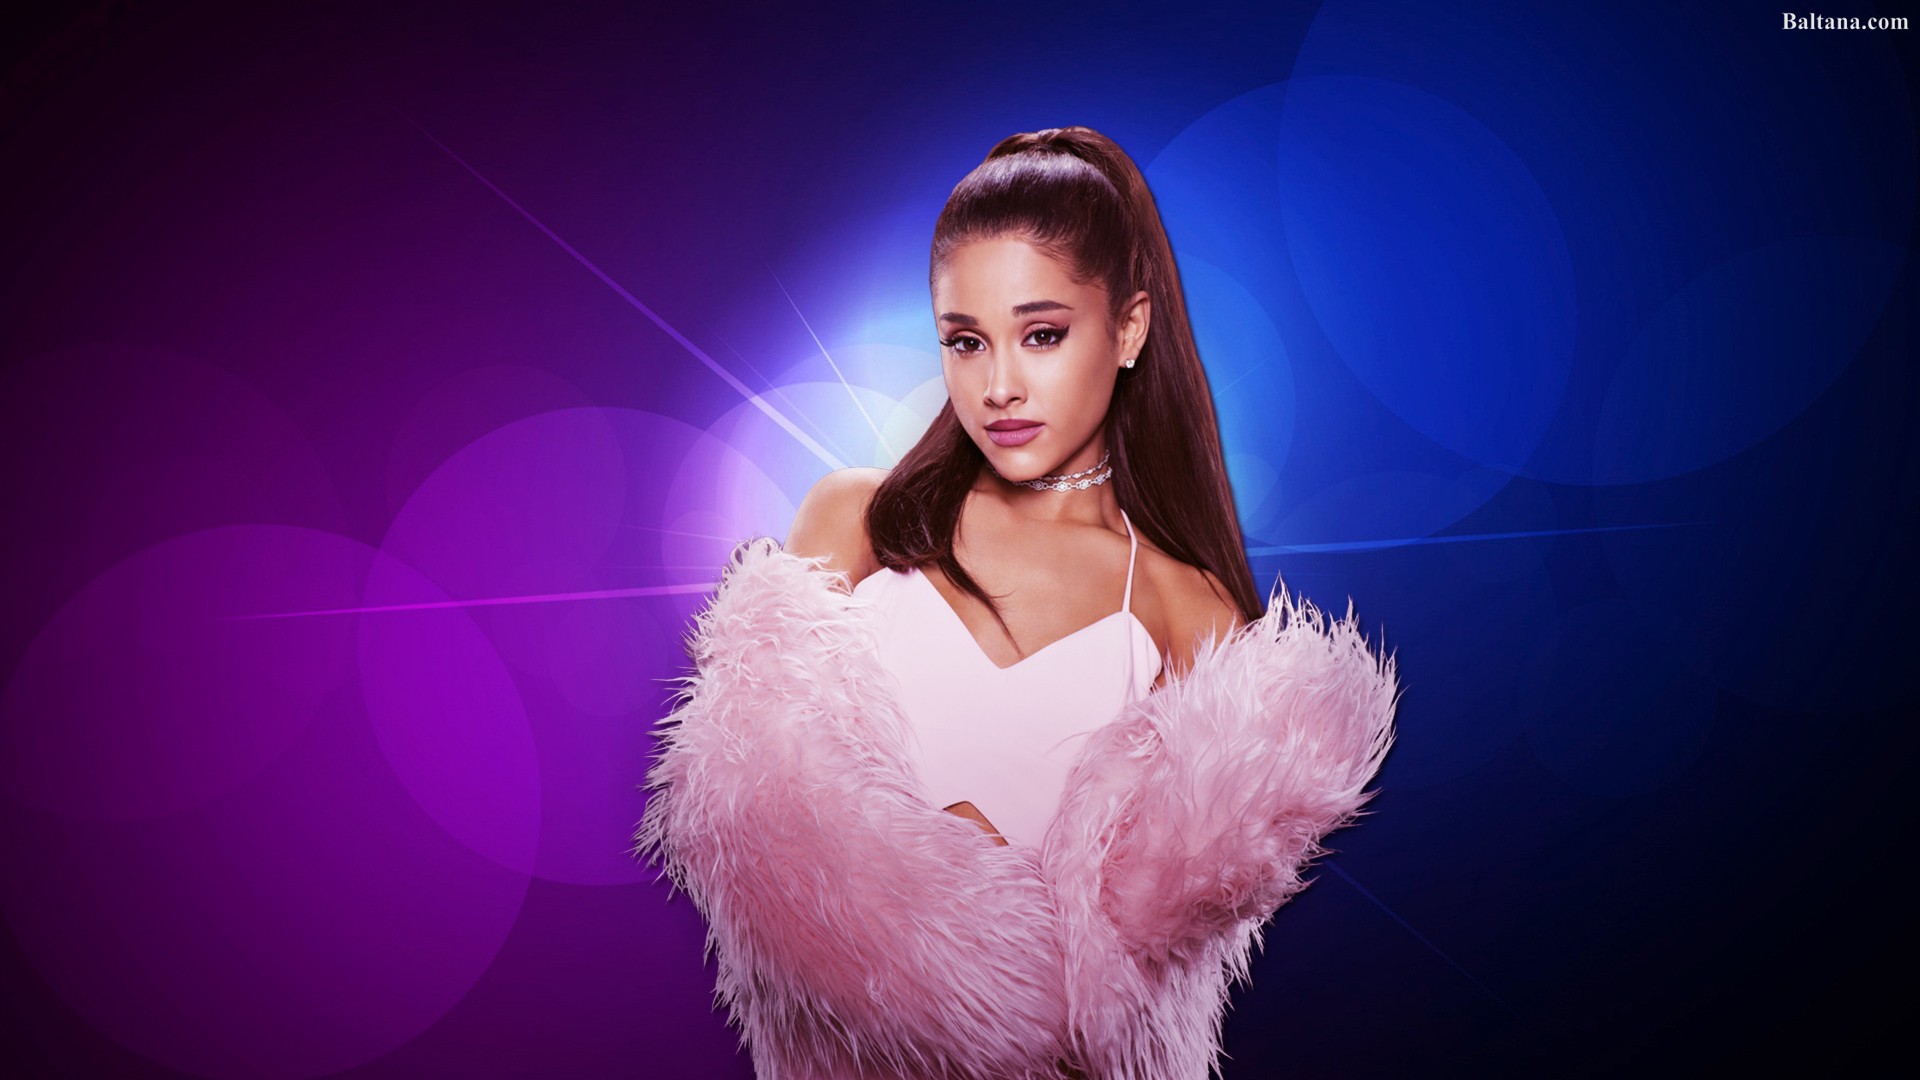 Ariana Grande Wallpaper HD Background Image Pics Photos